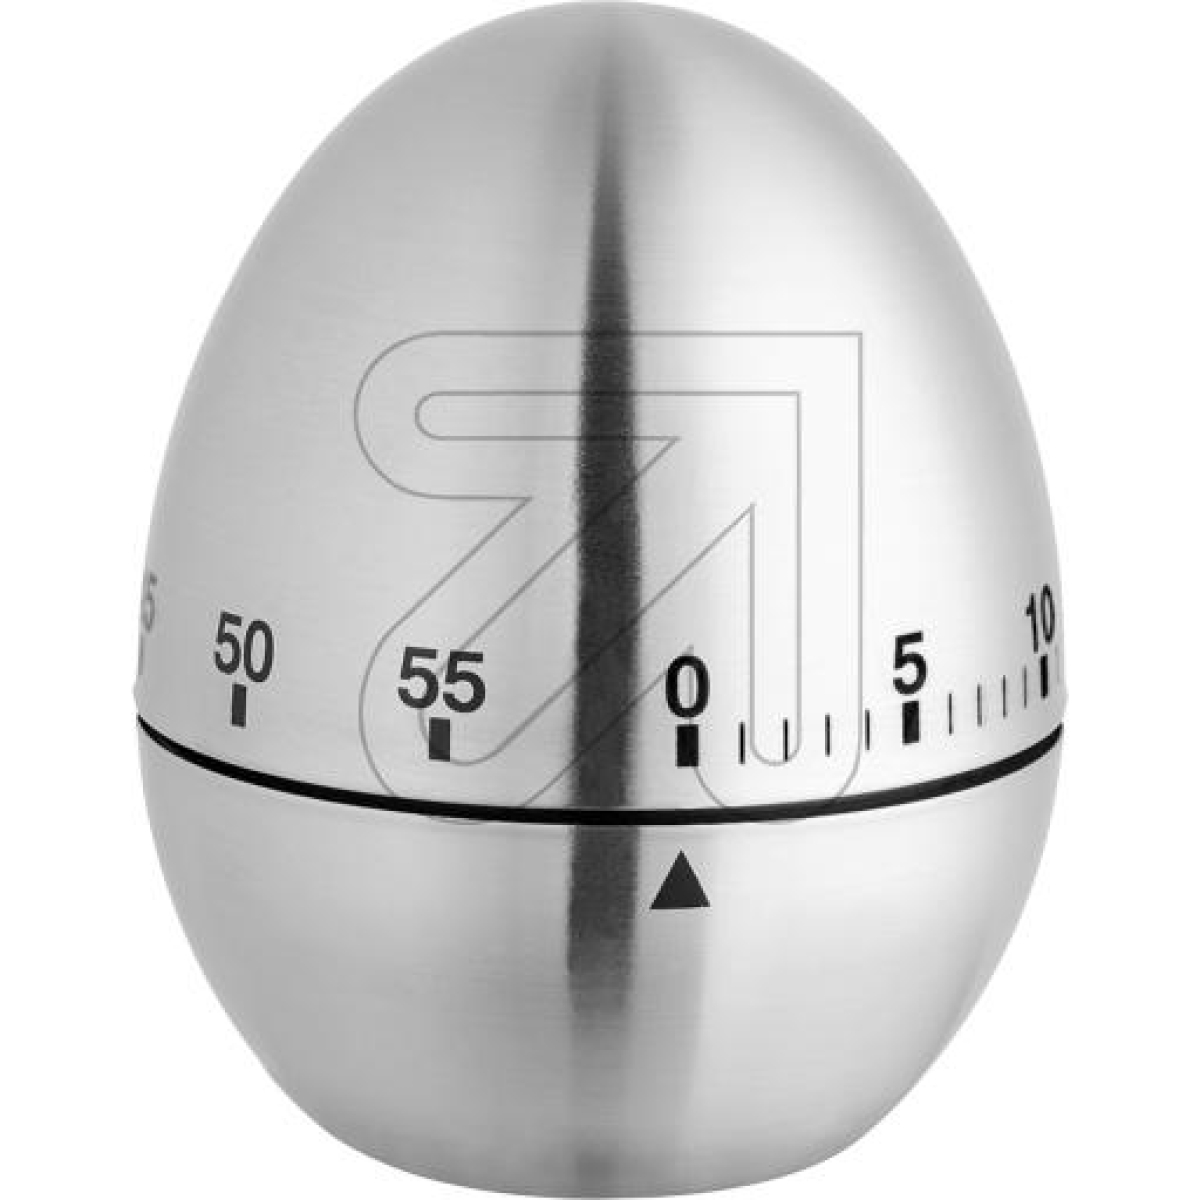 TFATimer egg stainless steelArticle-No: 420120